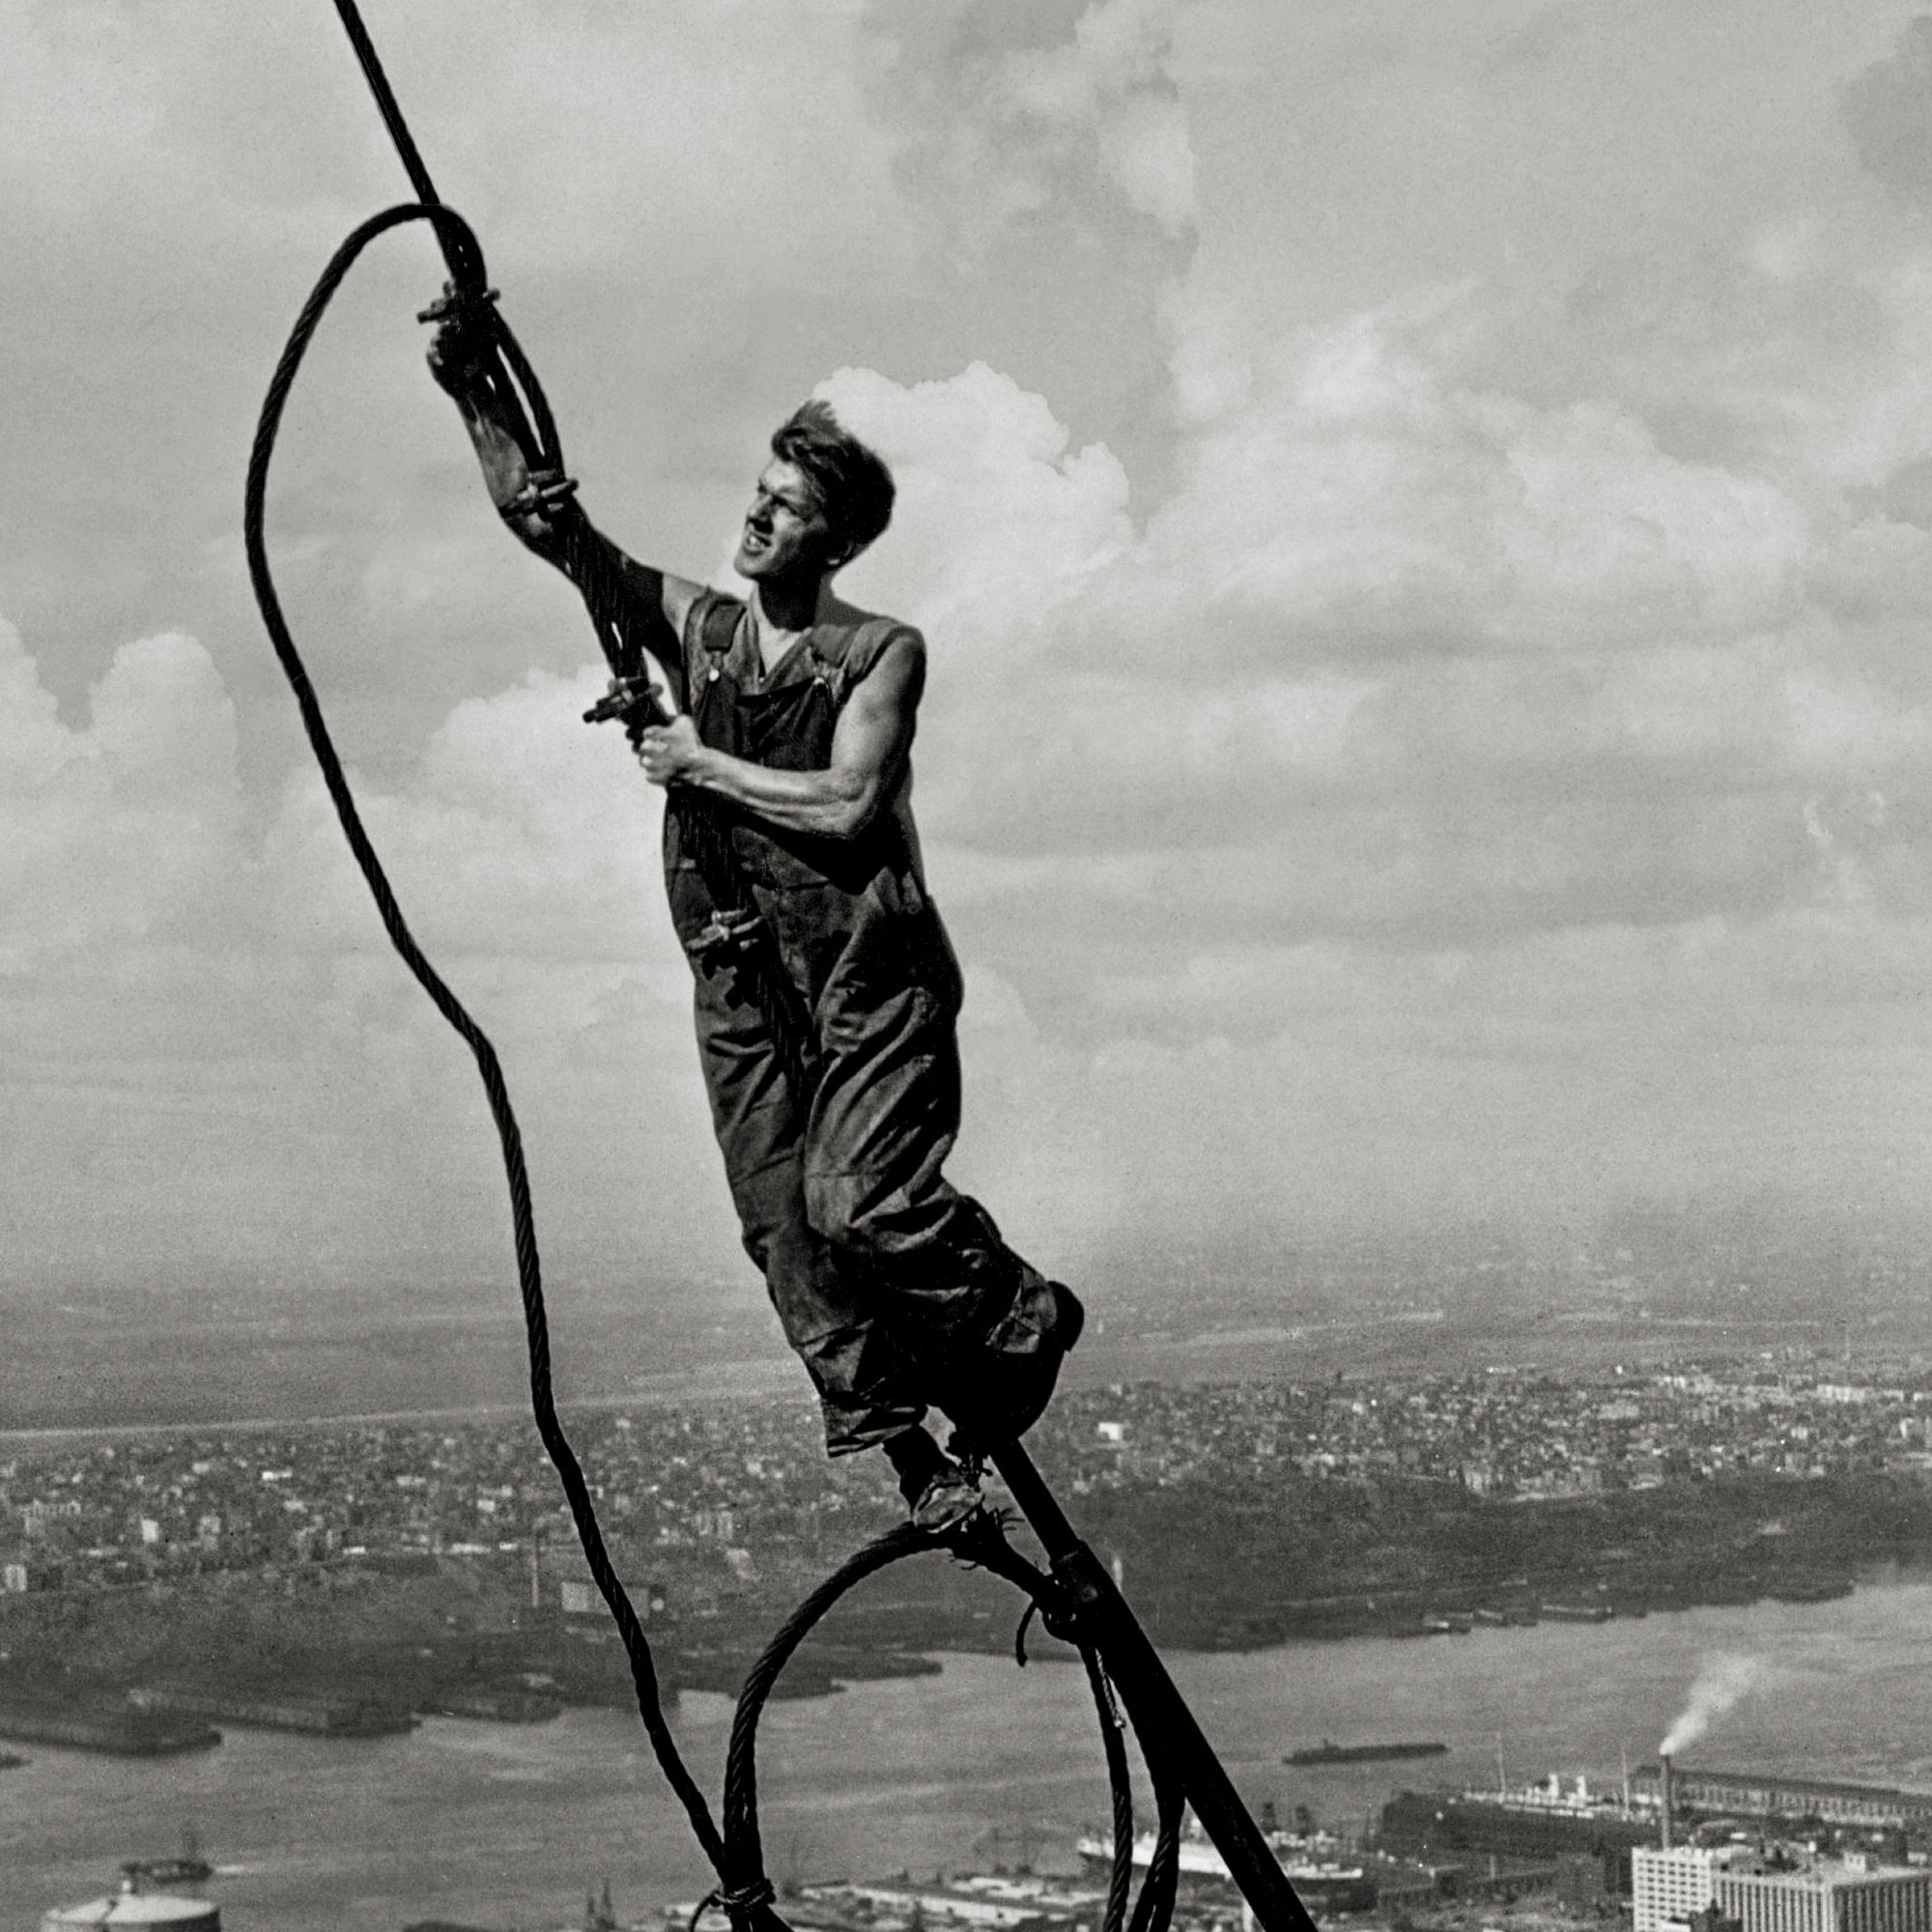 Icarus, Lewis Hine, 1930, Empire State Building Historical Pix